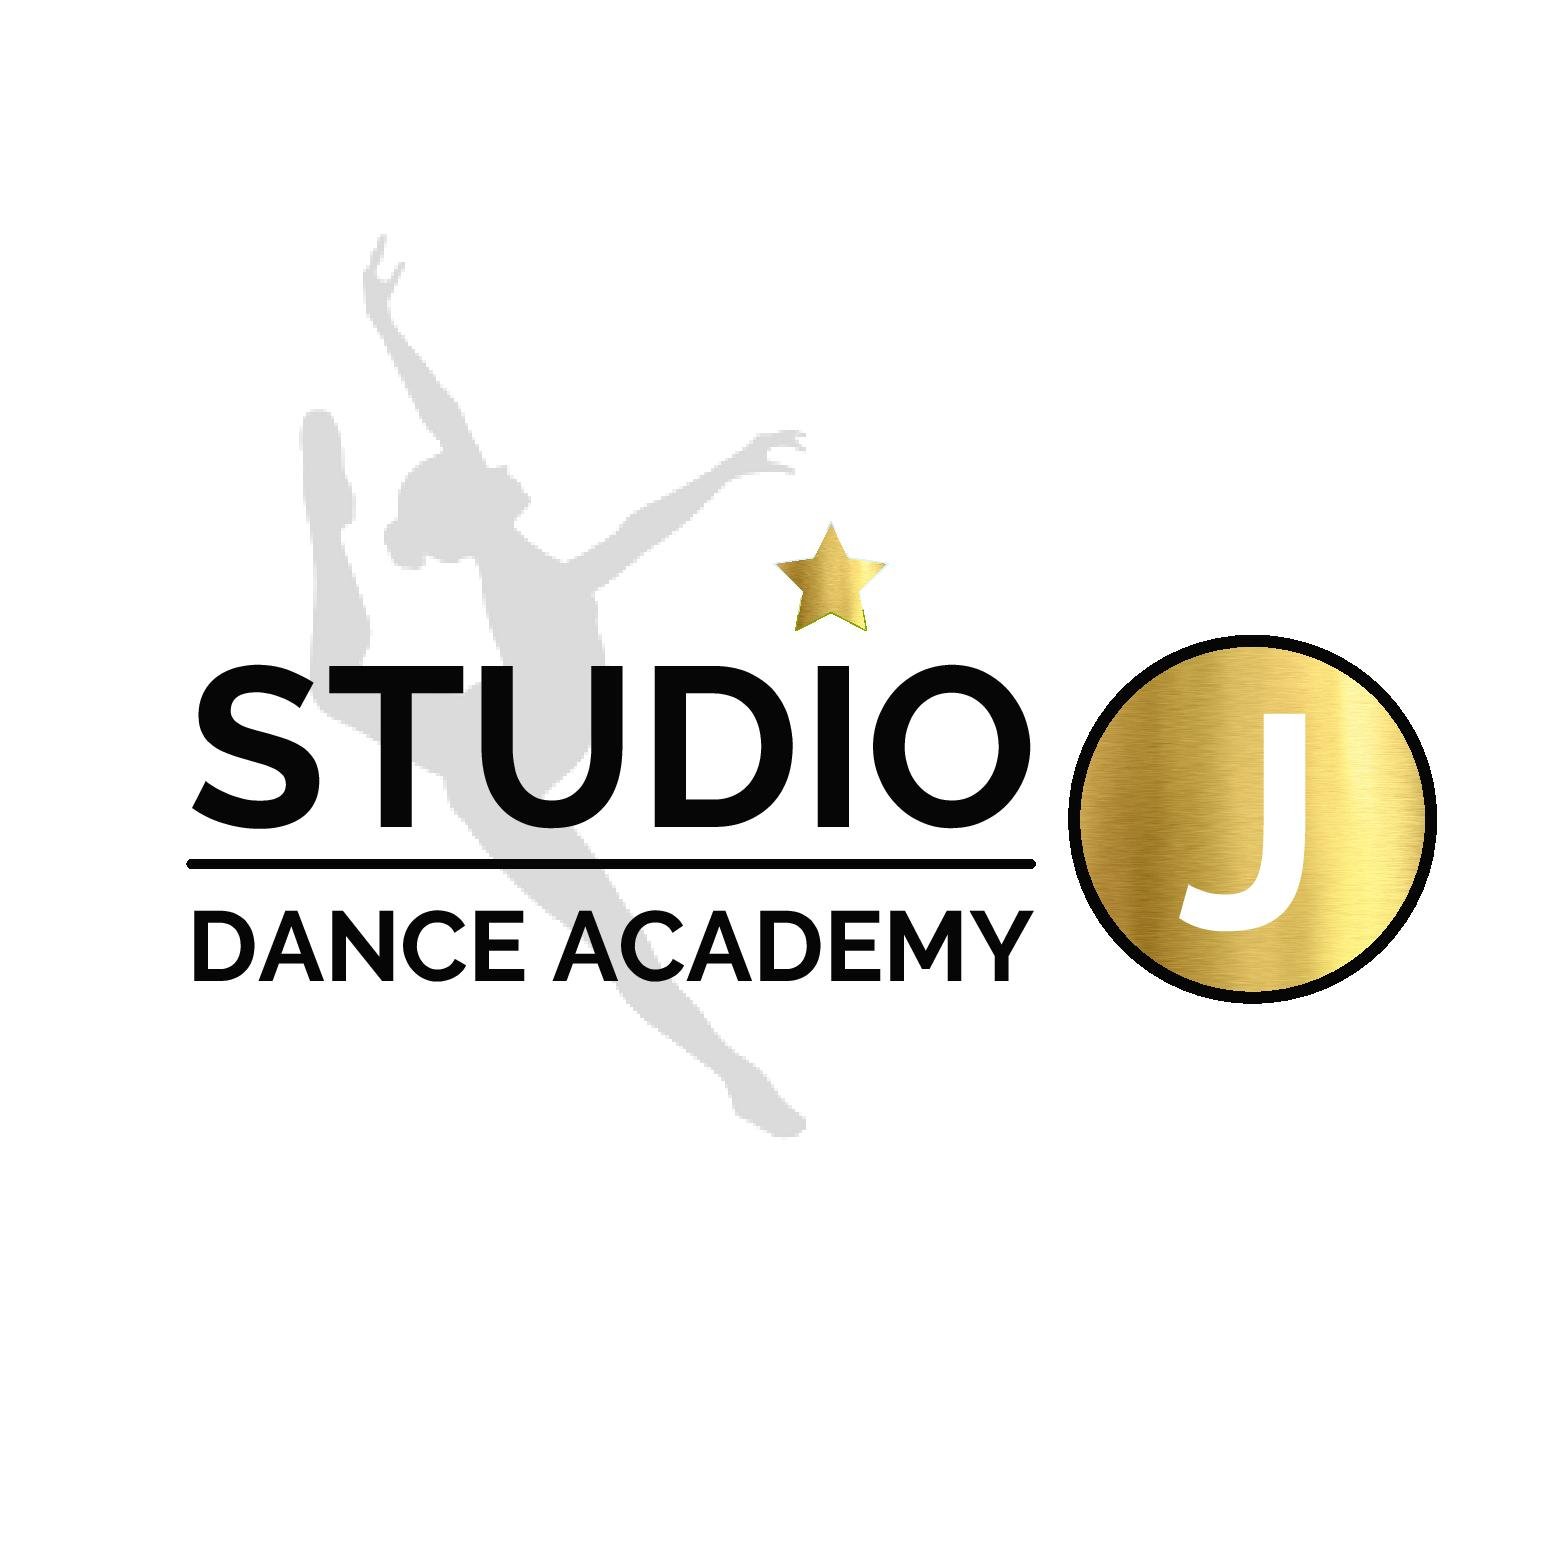 Studio J Dance Academy logo